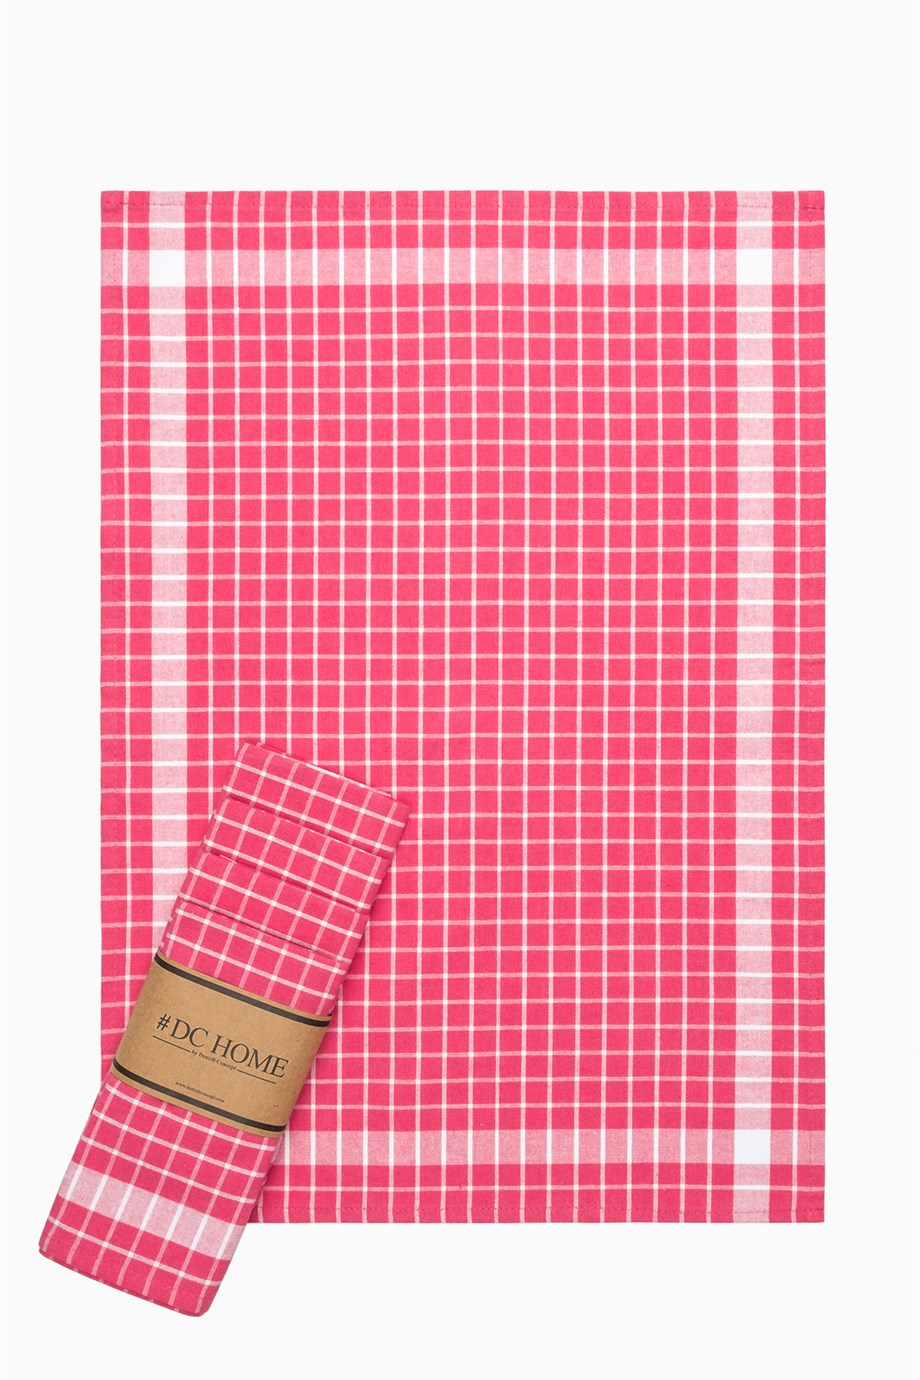 DENIZLI CONCEPT Checkered Tea Towel Pink